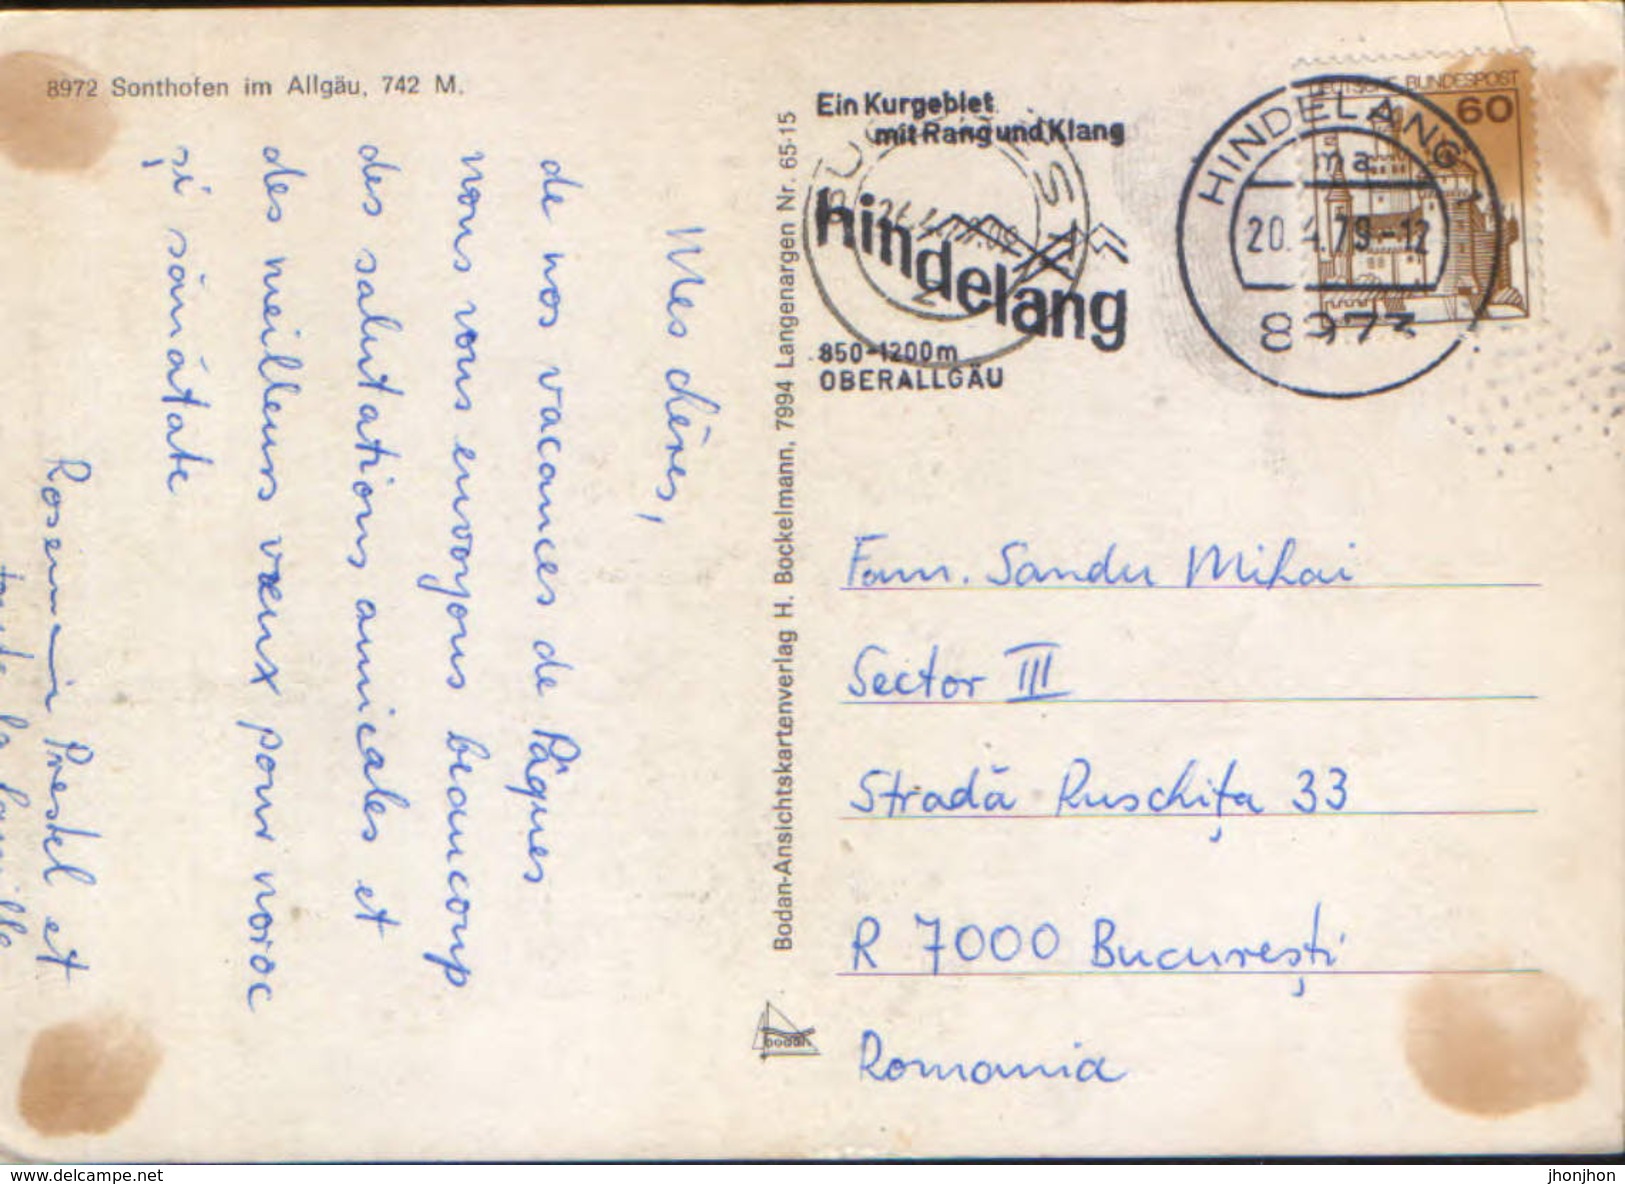 Deutschland - Postcard Circulated In 1979 Used - Sonthofen In The Allgäu - Multipleviews - 2/scans - Sonthofen